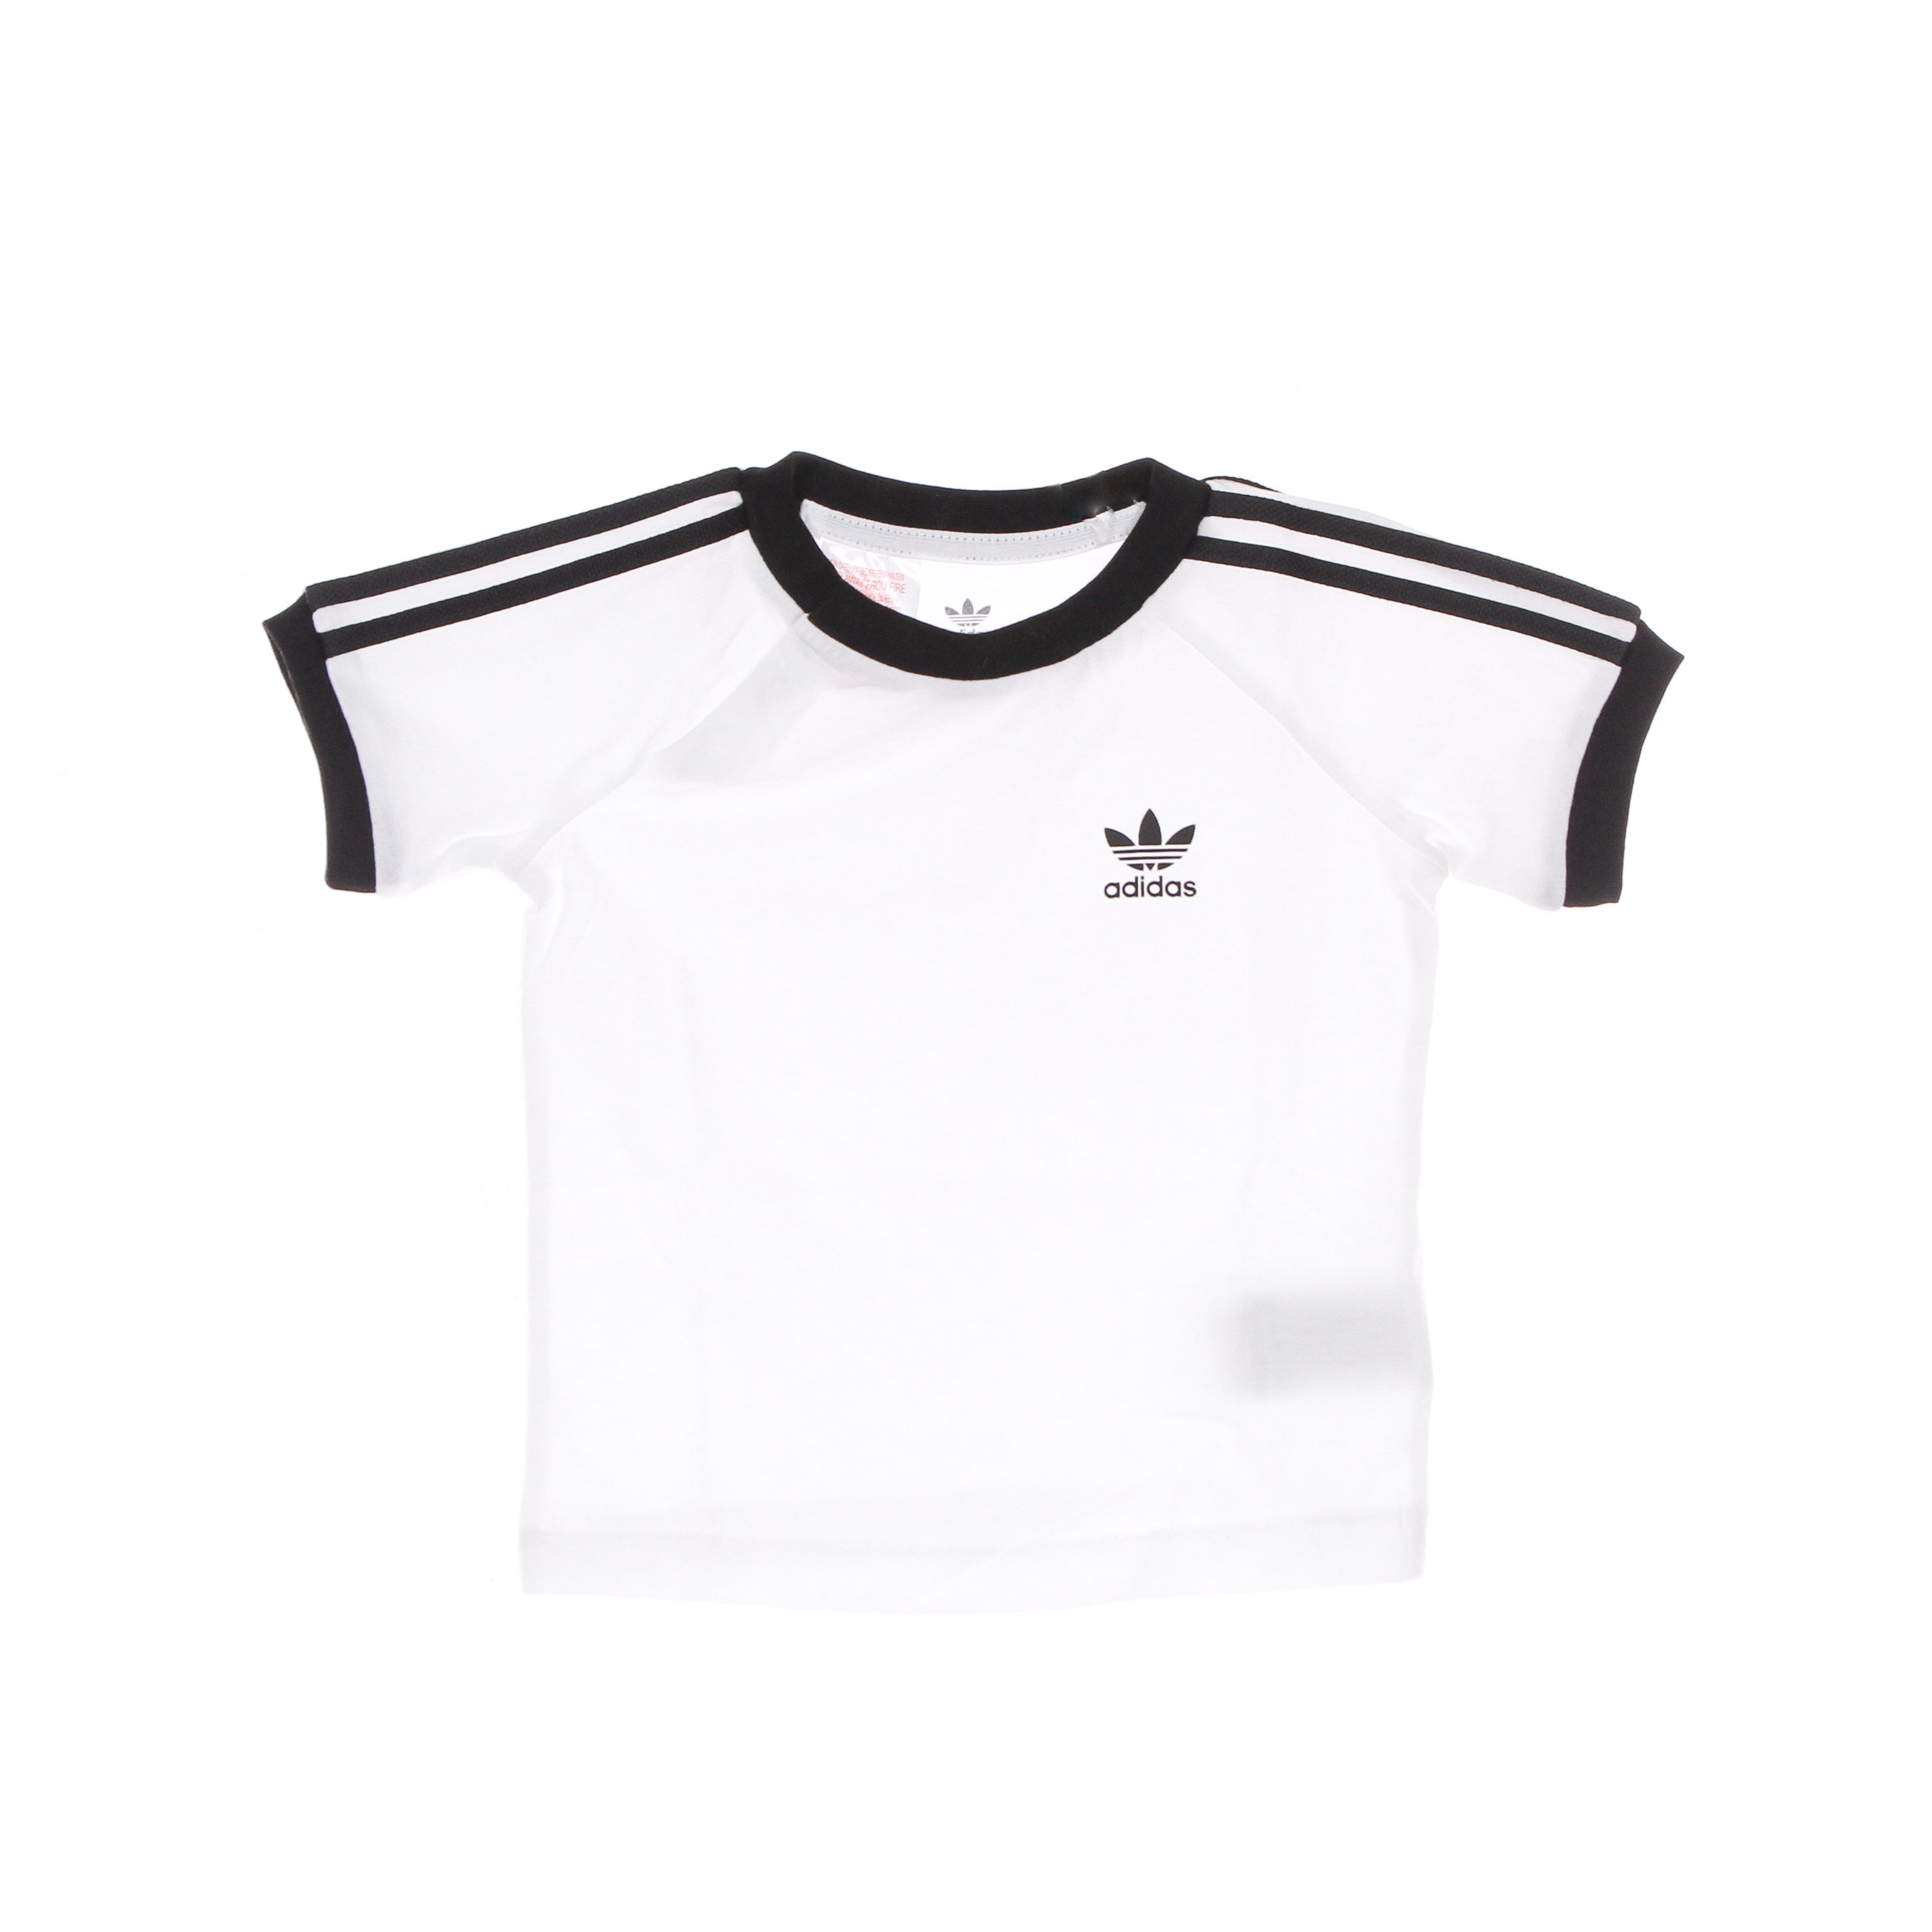 Adidas, Maglietta Bambino 3-stripes Tee, White/black